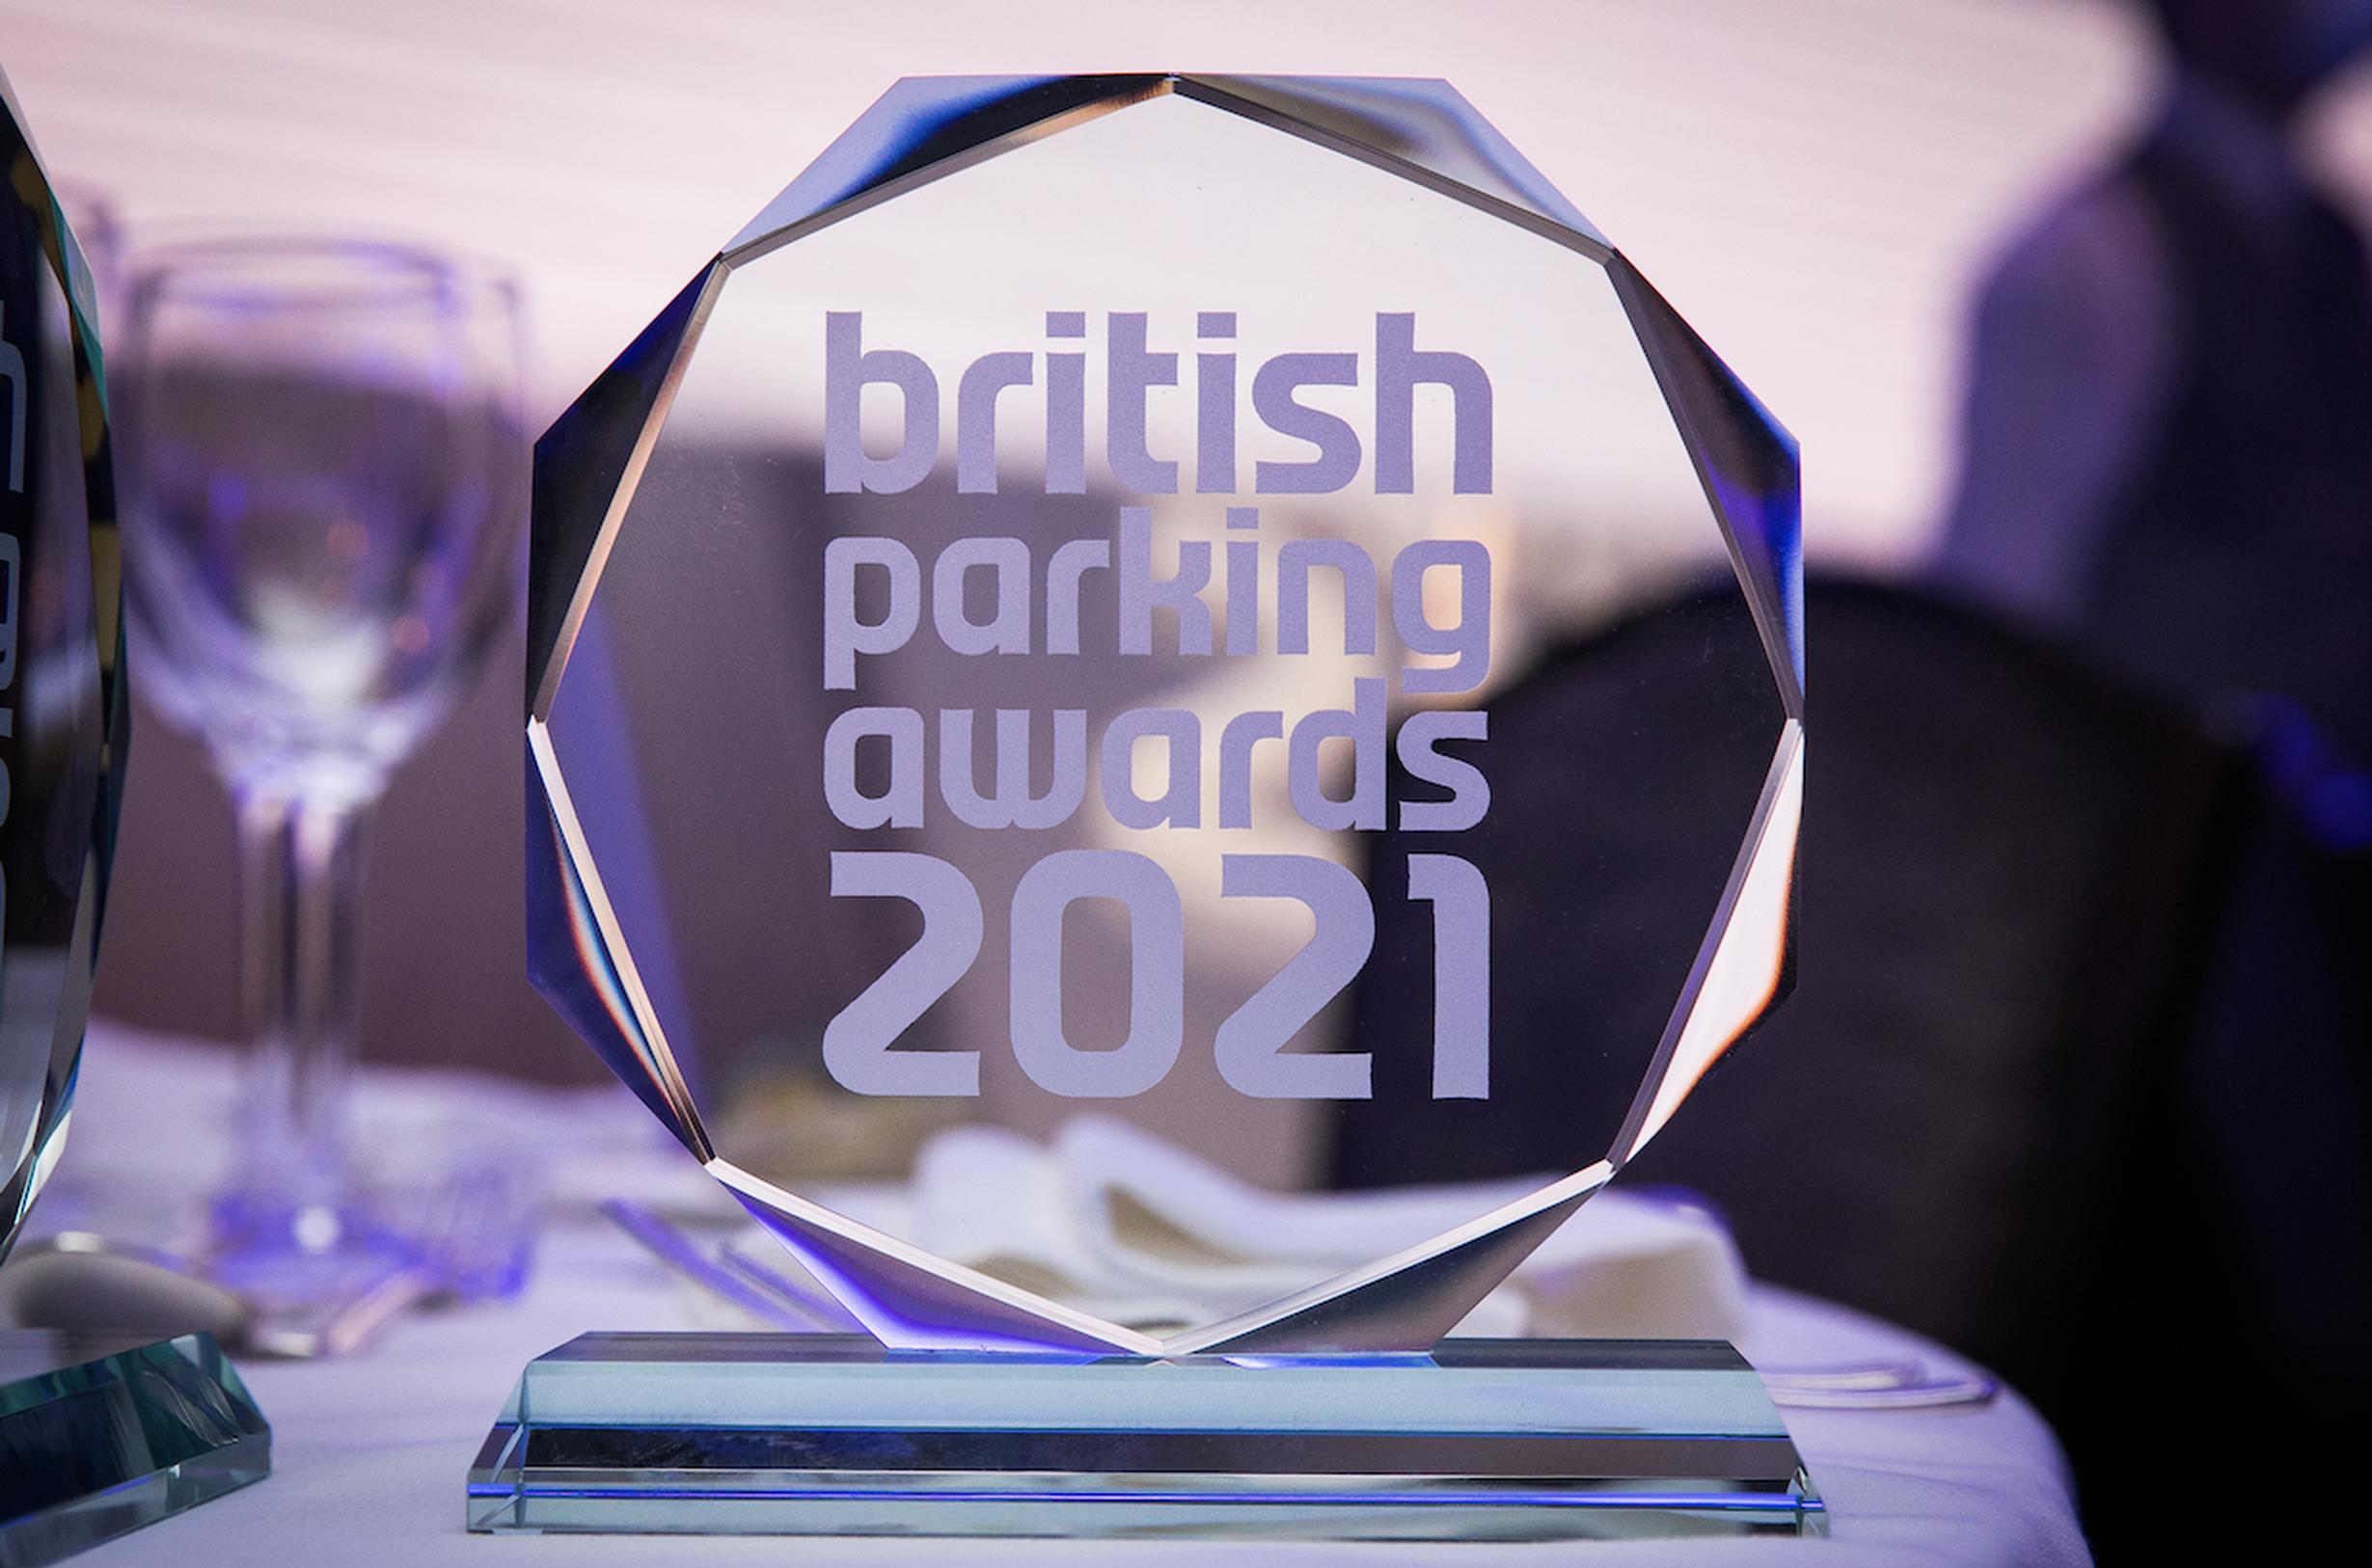 The British Parking Awards 2021 rosette